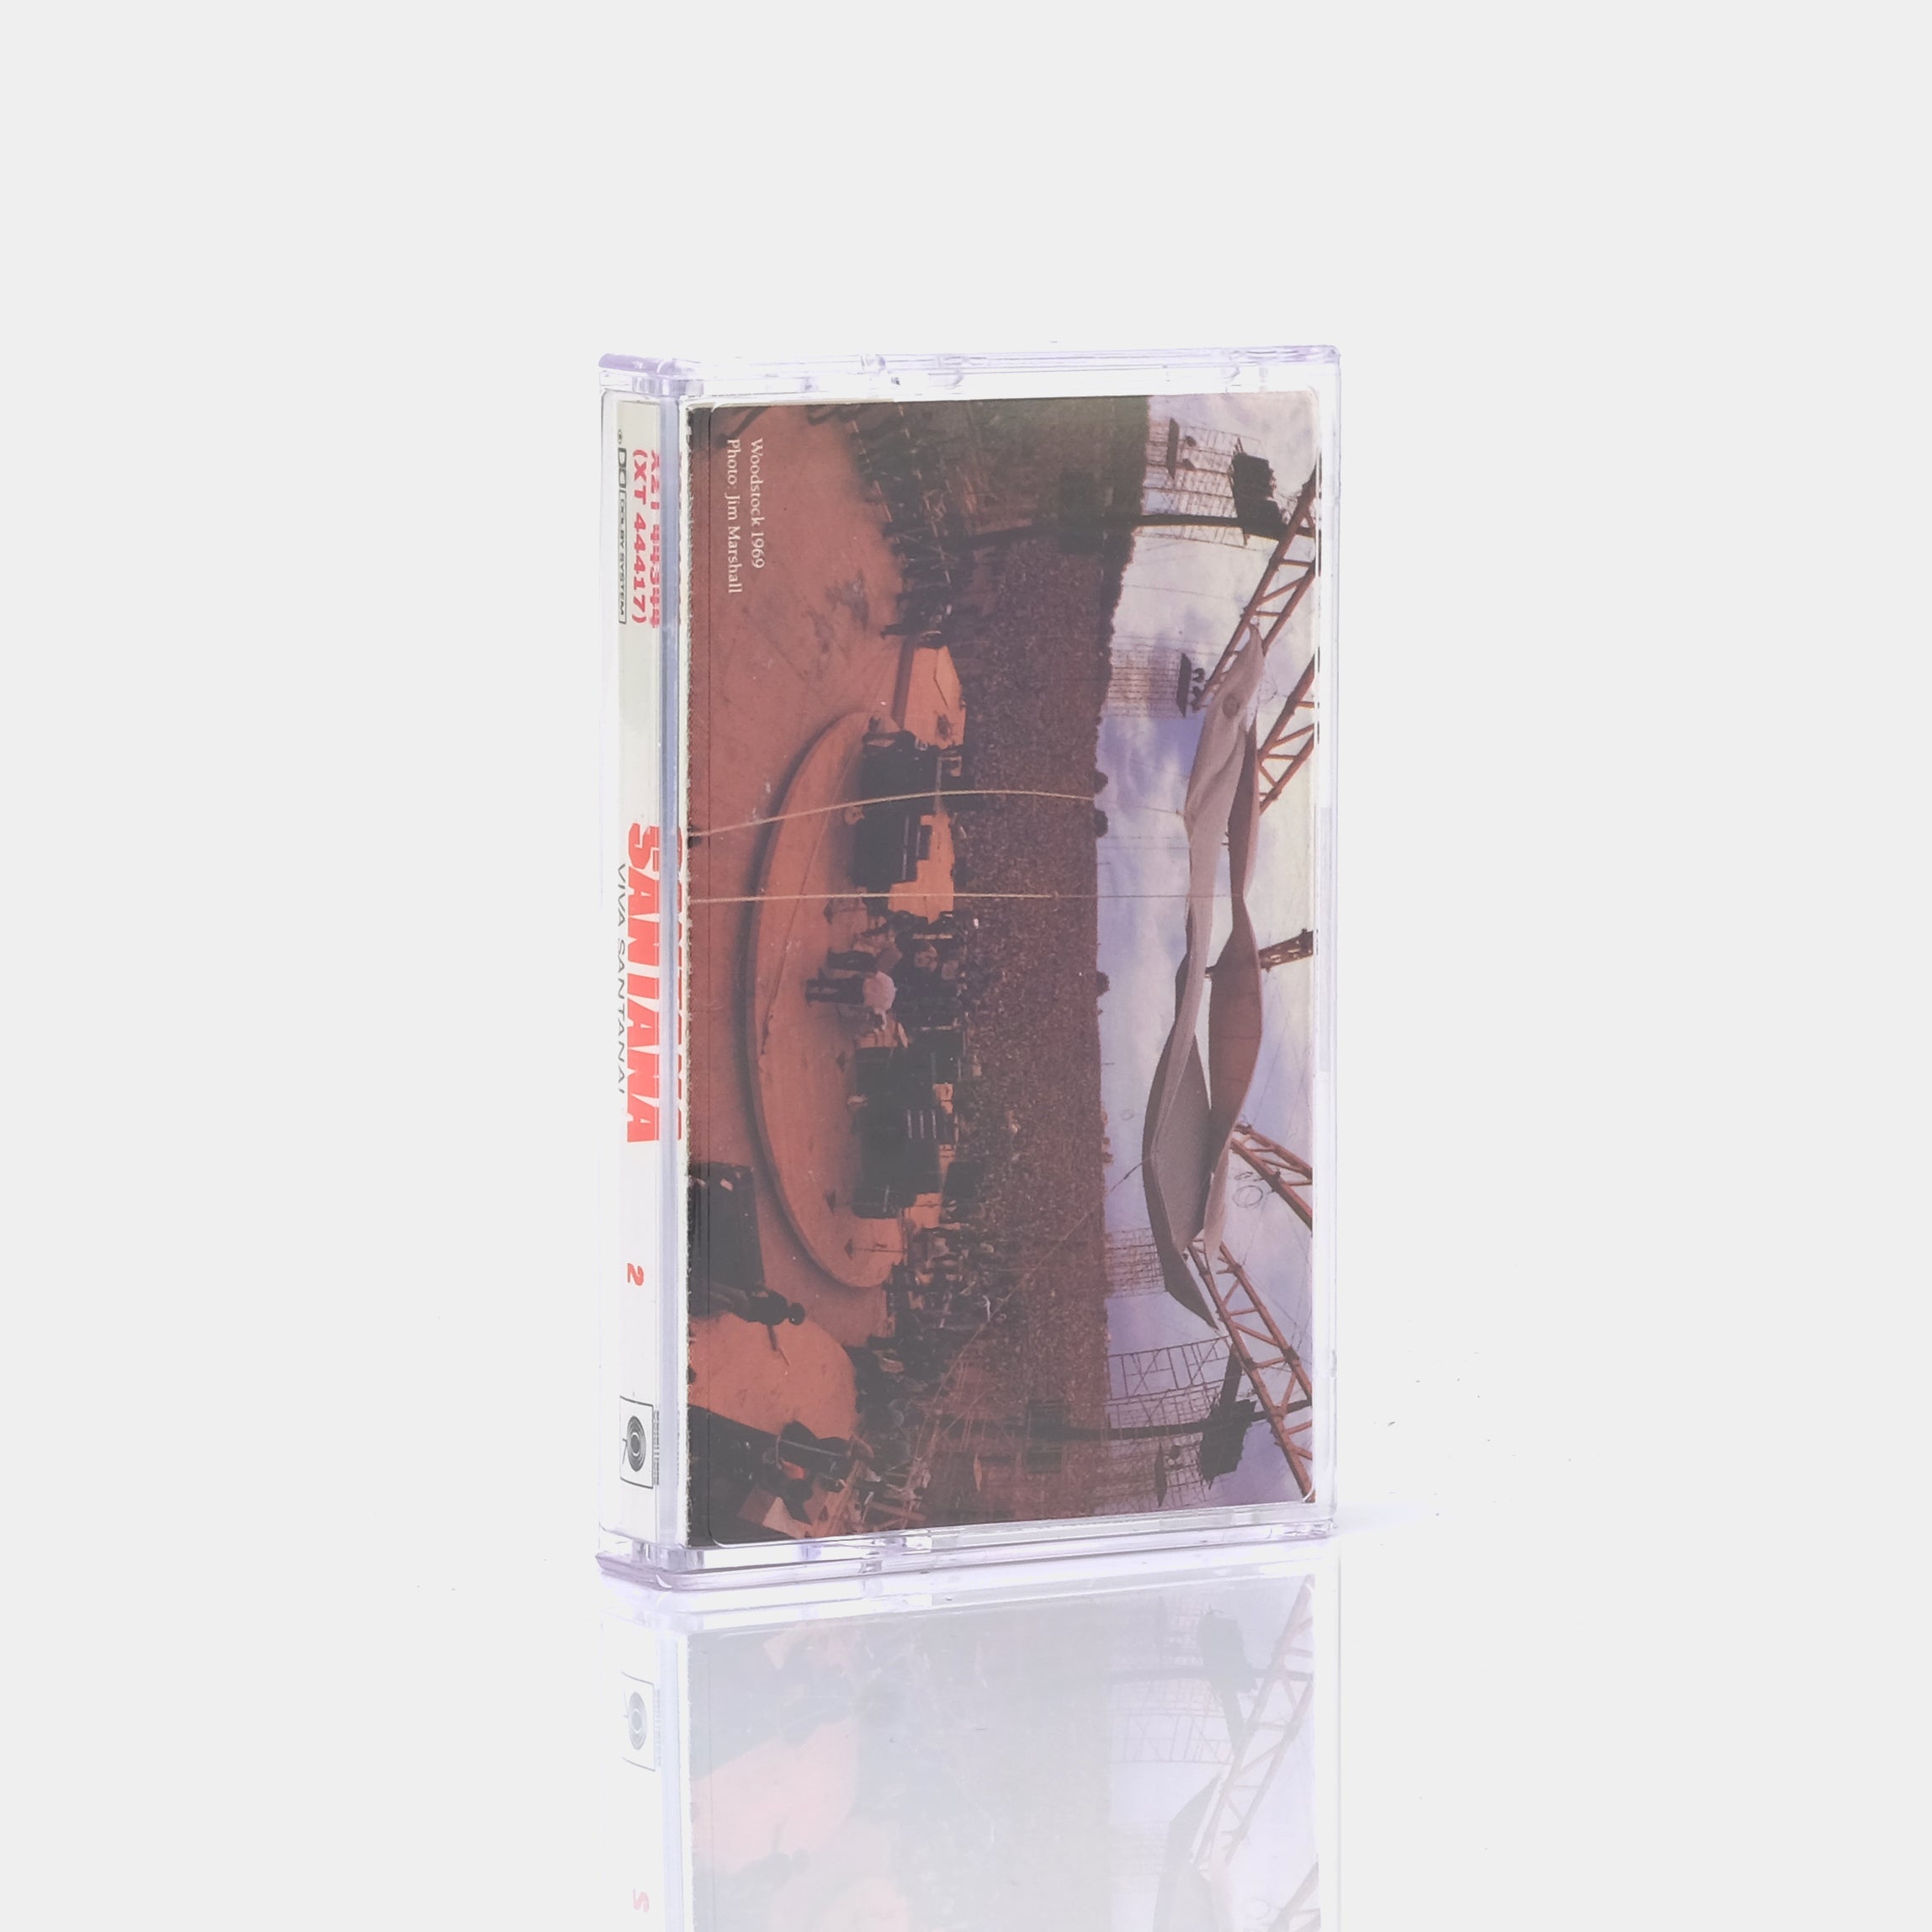 Santana - Viva Santana (Tape 2) Cassette Tape